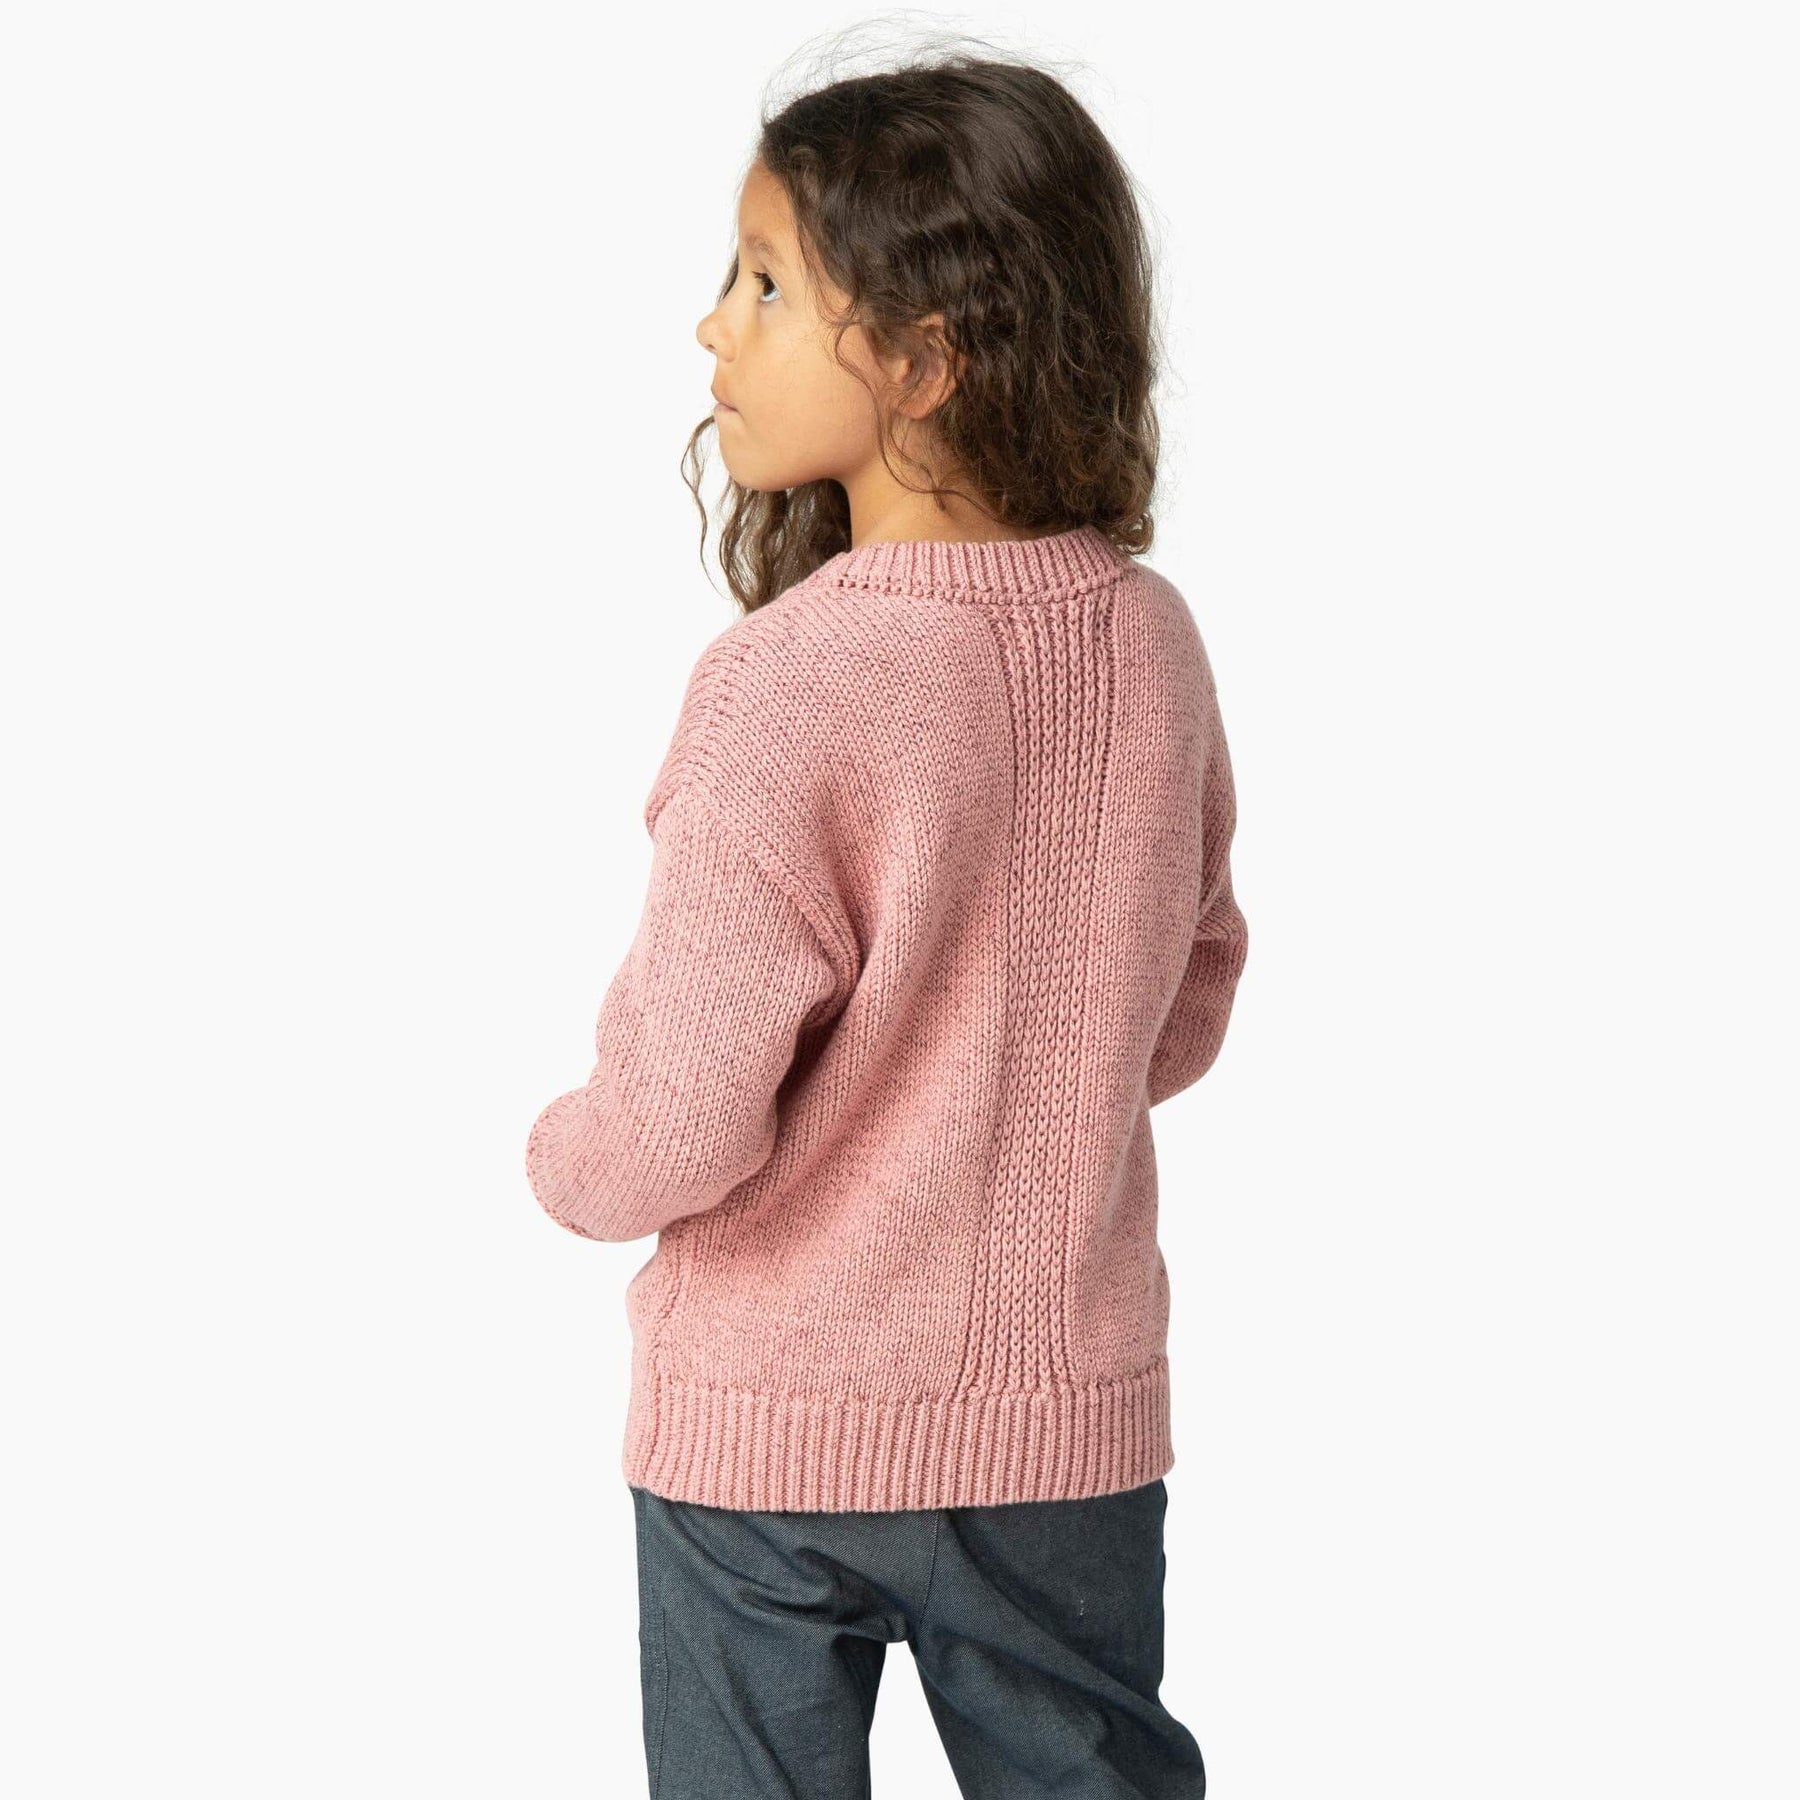 Italian made 100% Cotton. – Firebird Marled Sweater, from Organic